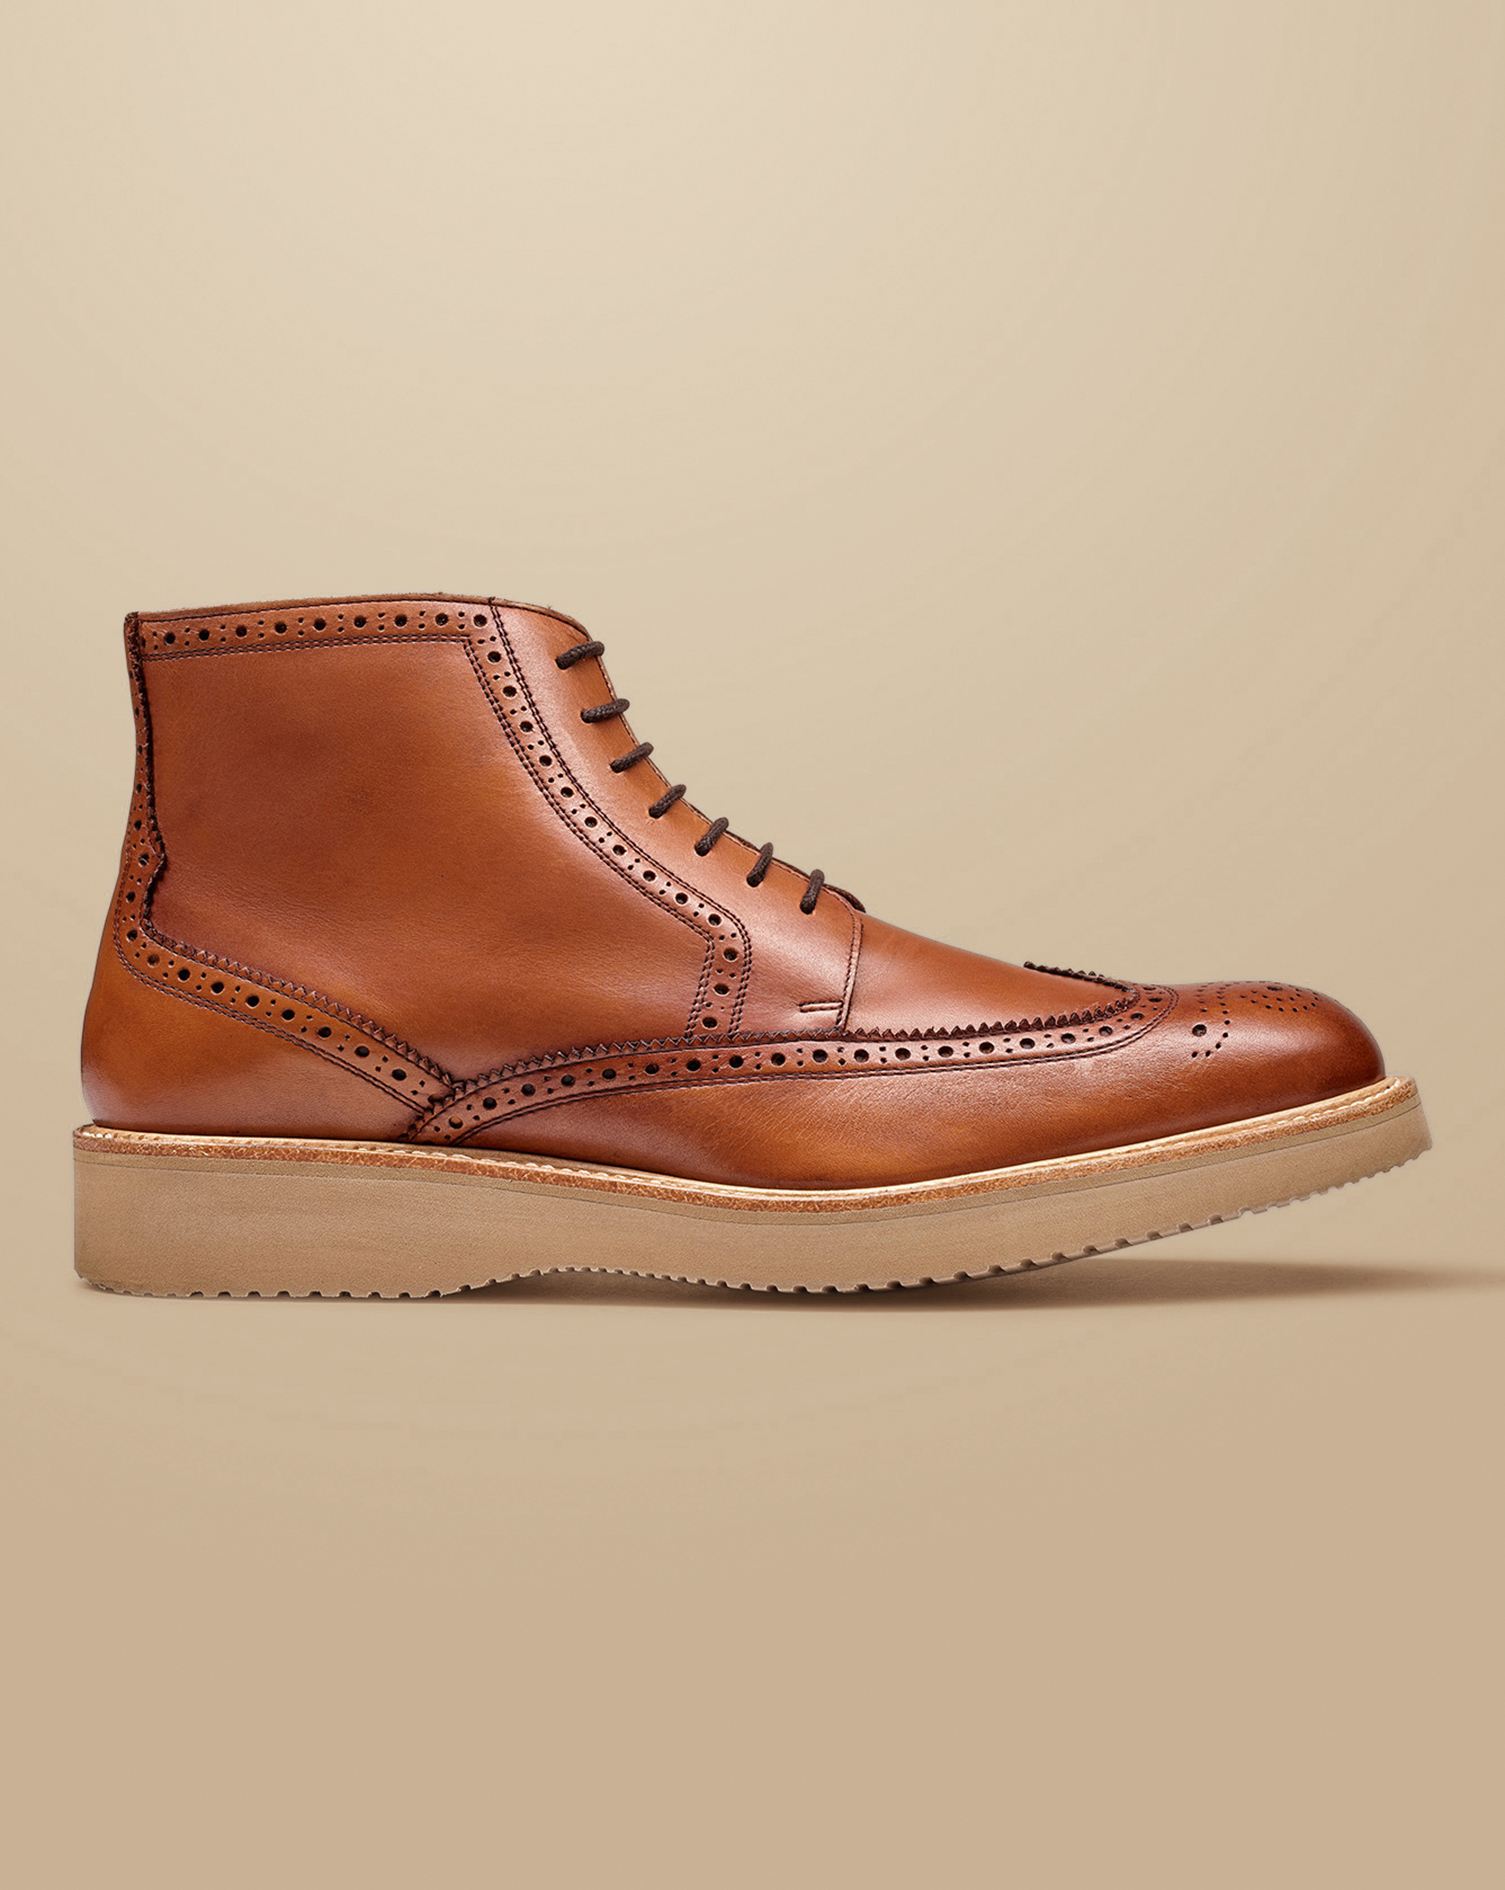 Men's Charles Tyrwhitt Brogue Boots - Dark Tan Brown Size 9 Leather
